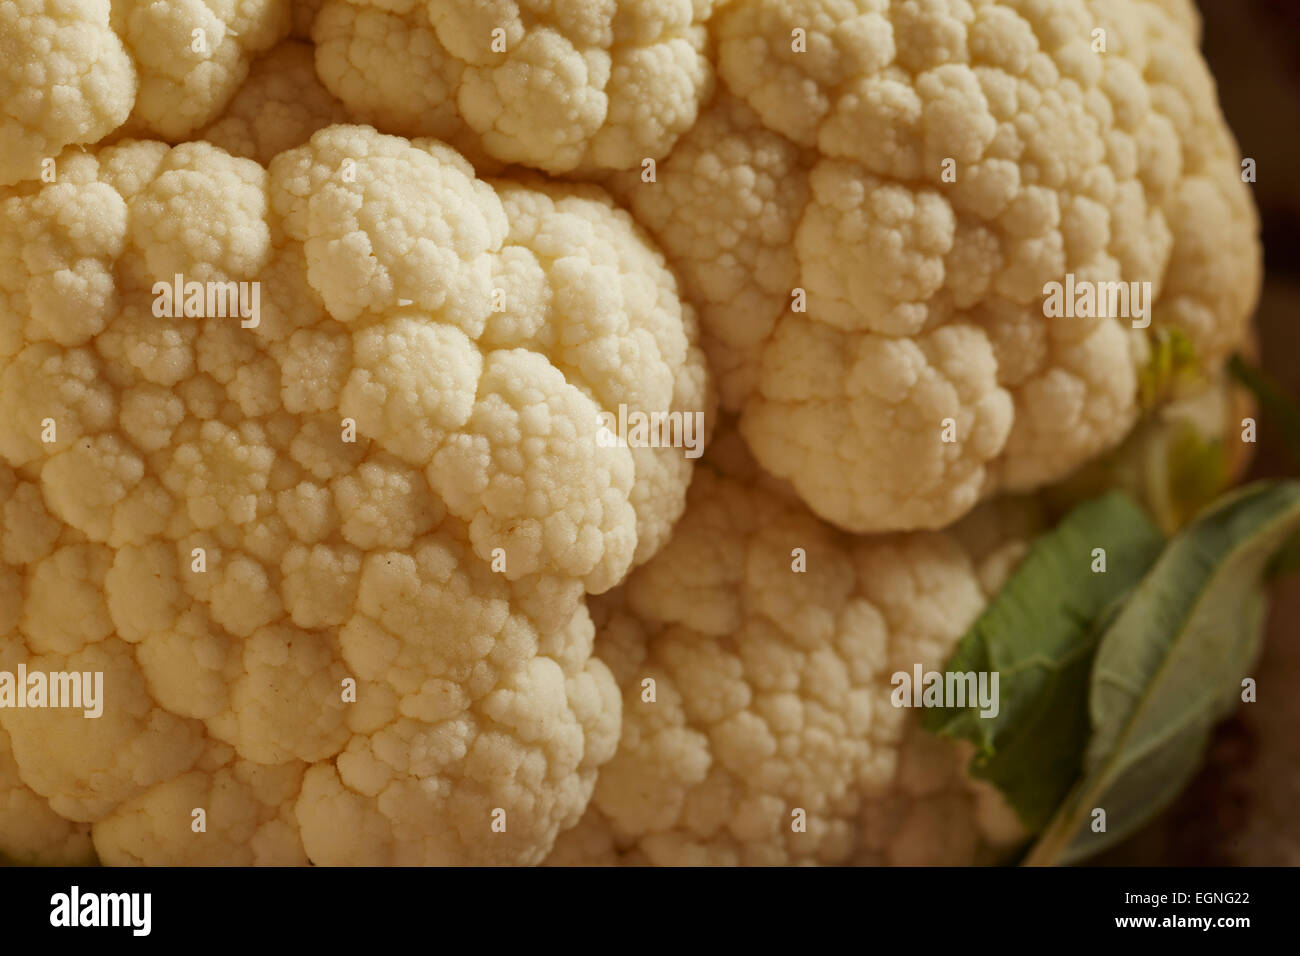 Whole head of cauliflower Stock Photo